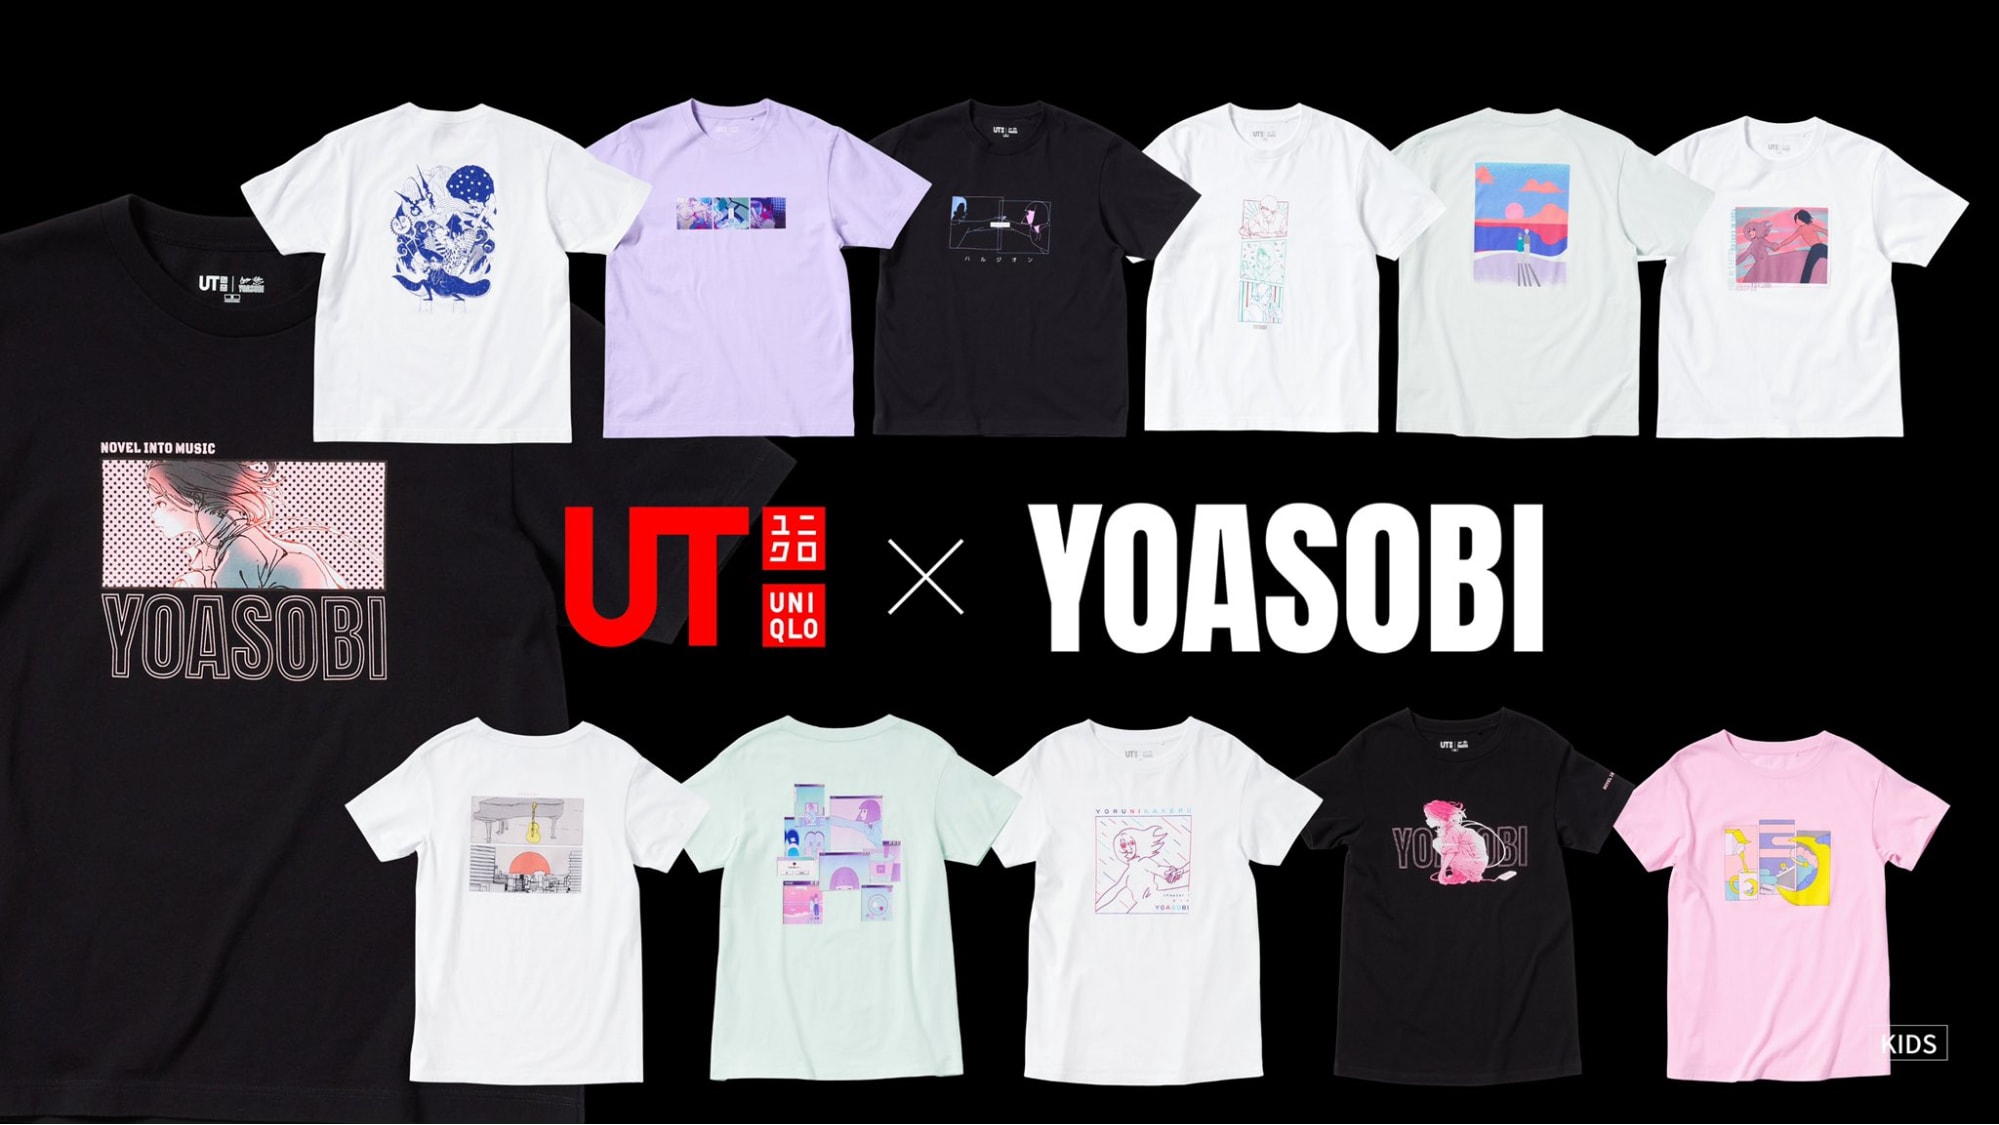 yoasobi ut collaboration